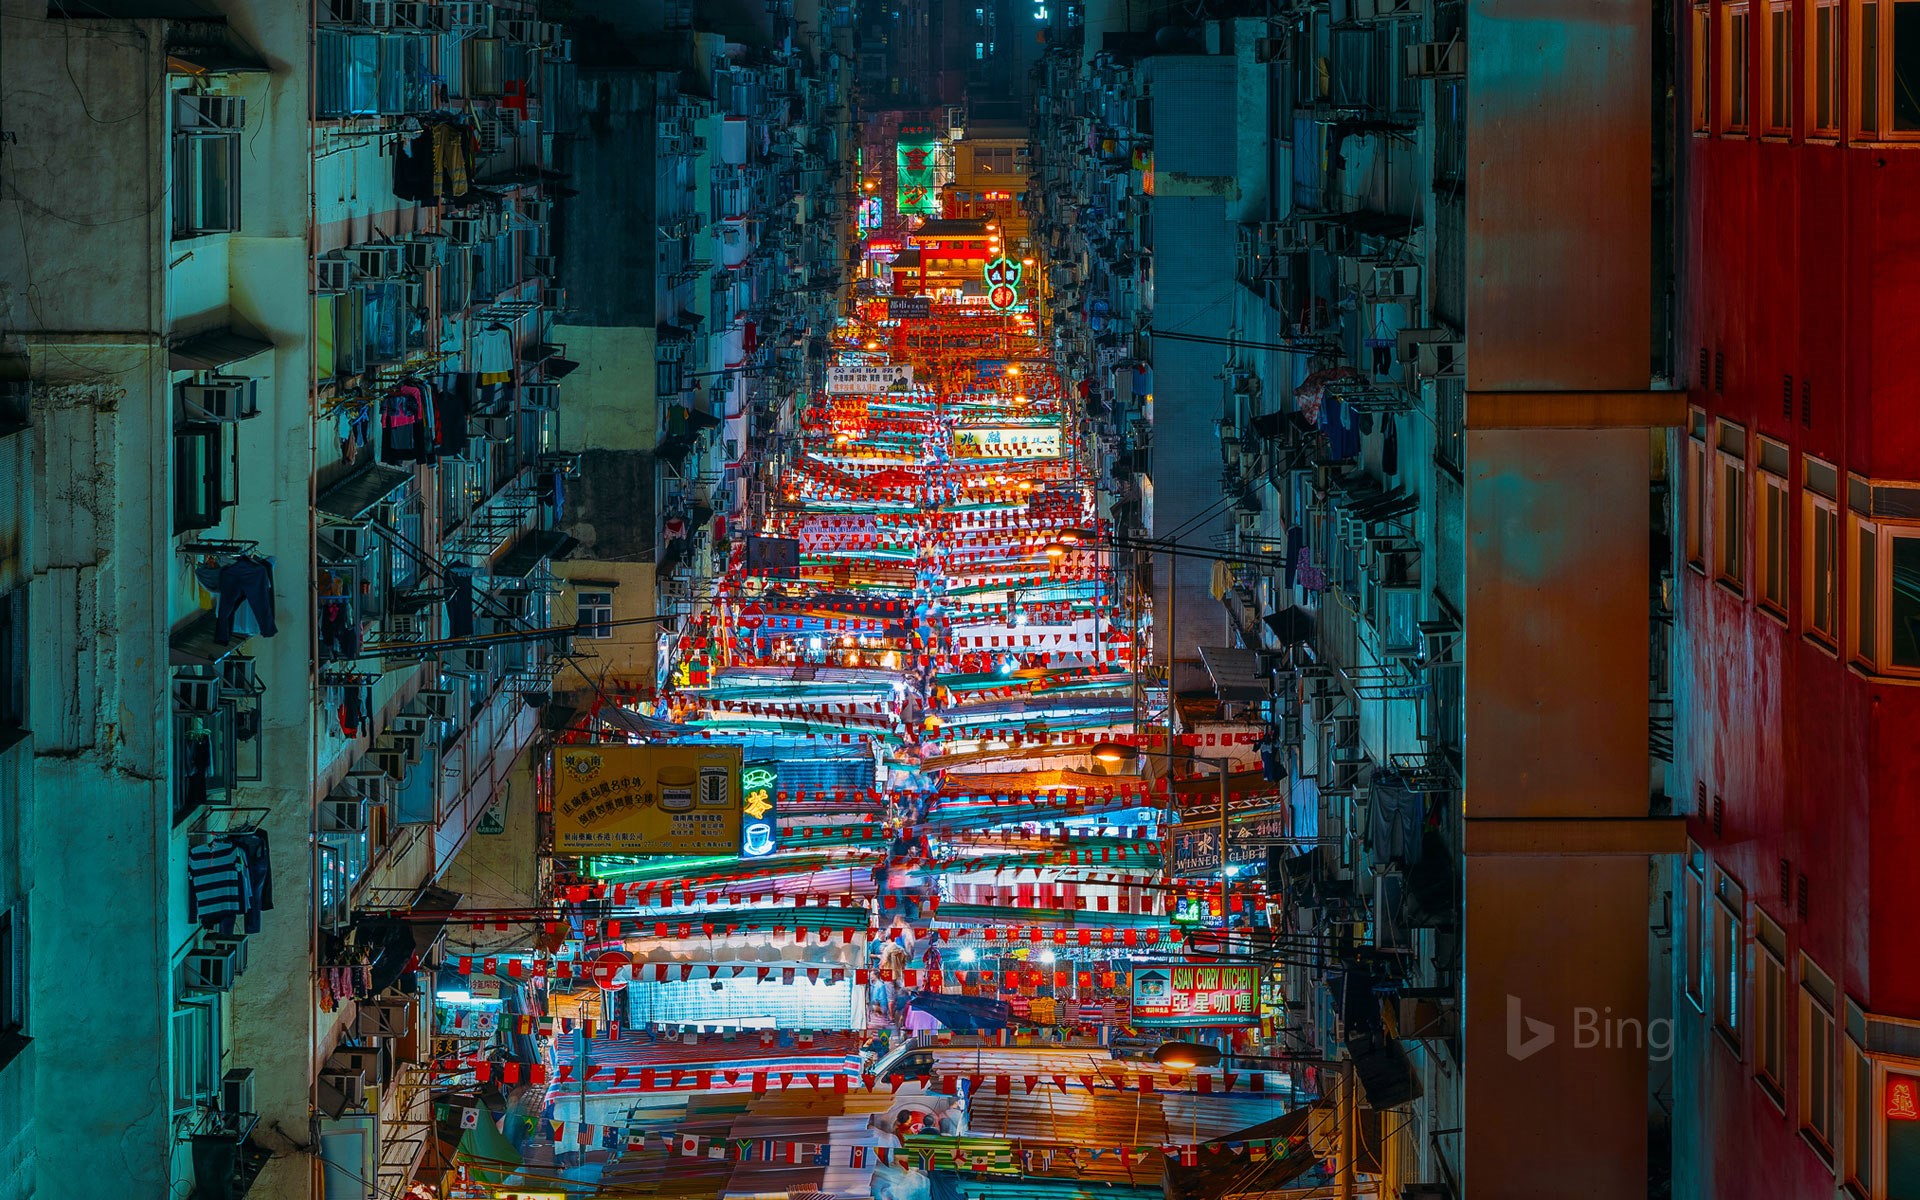 Temple Street Night Market in Yau Ma Tei, Hong Kong